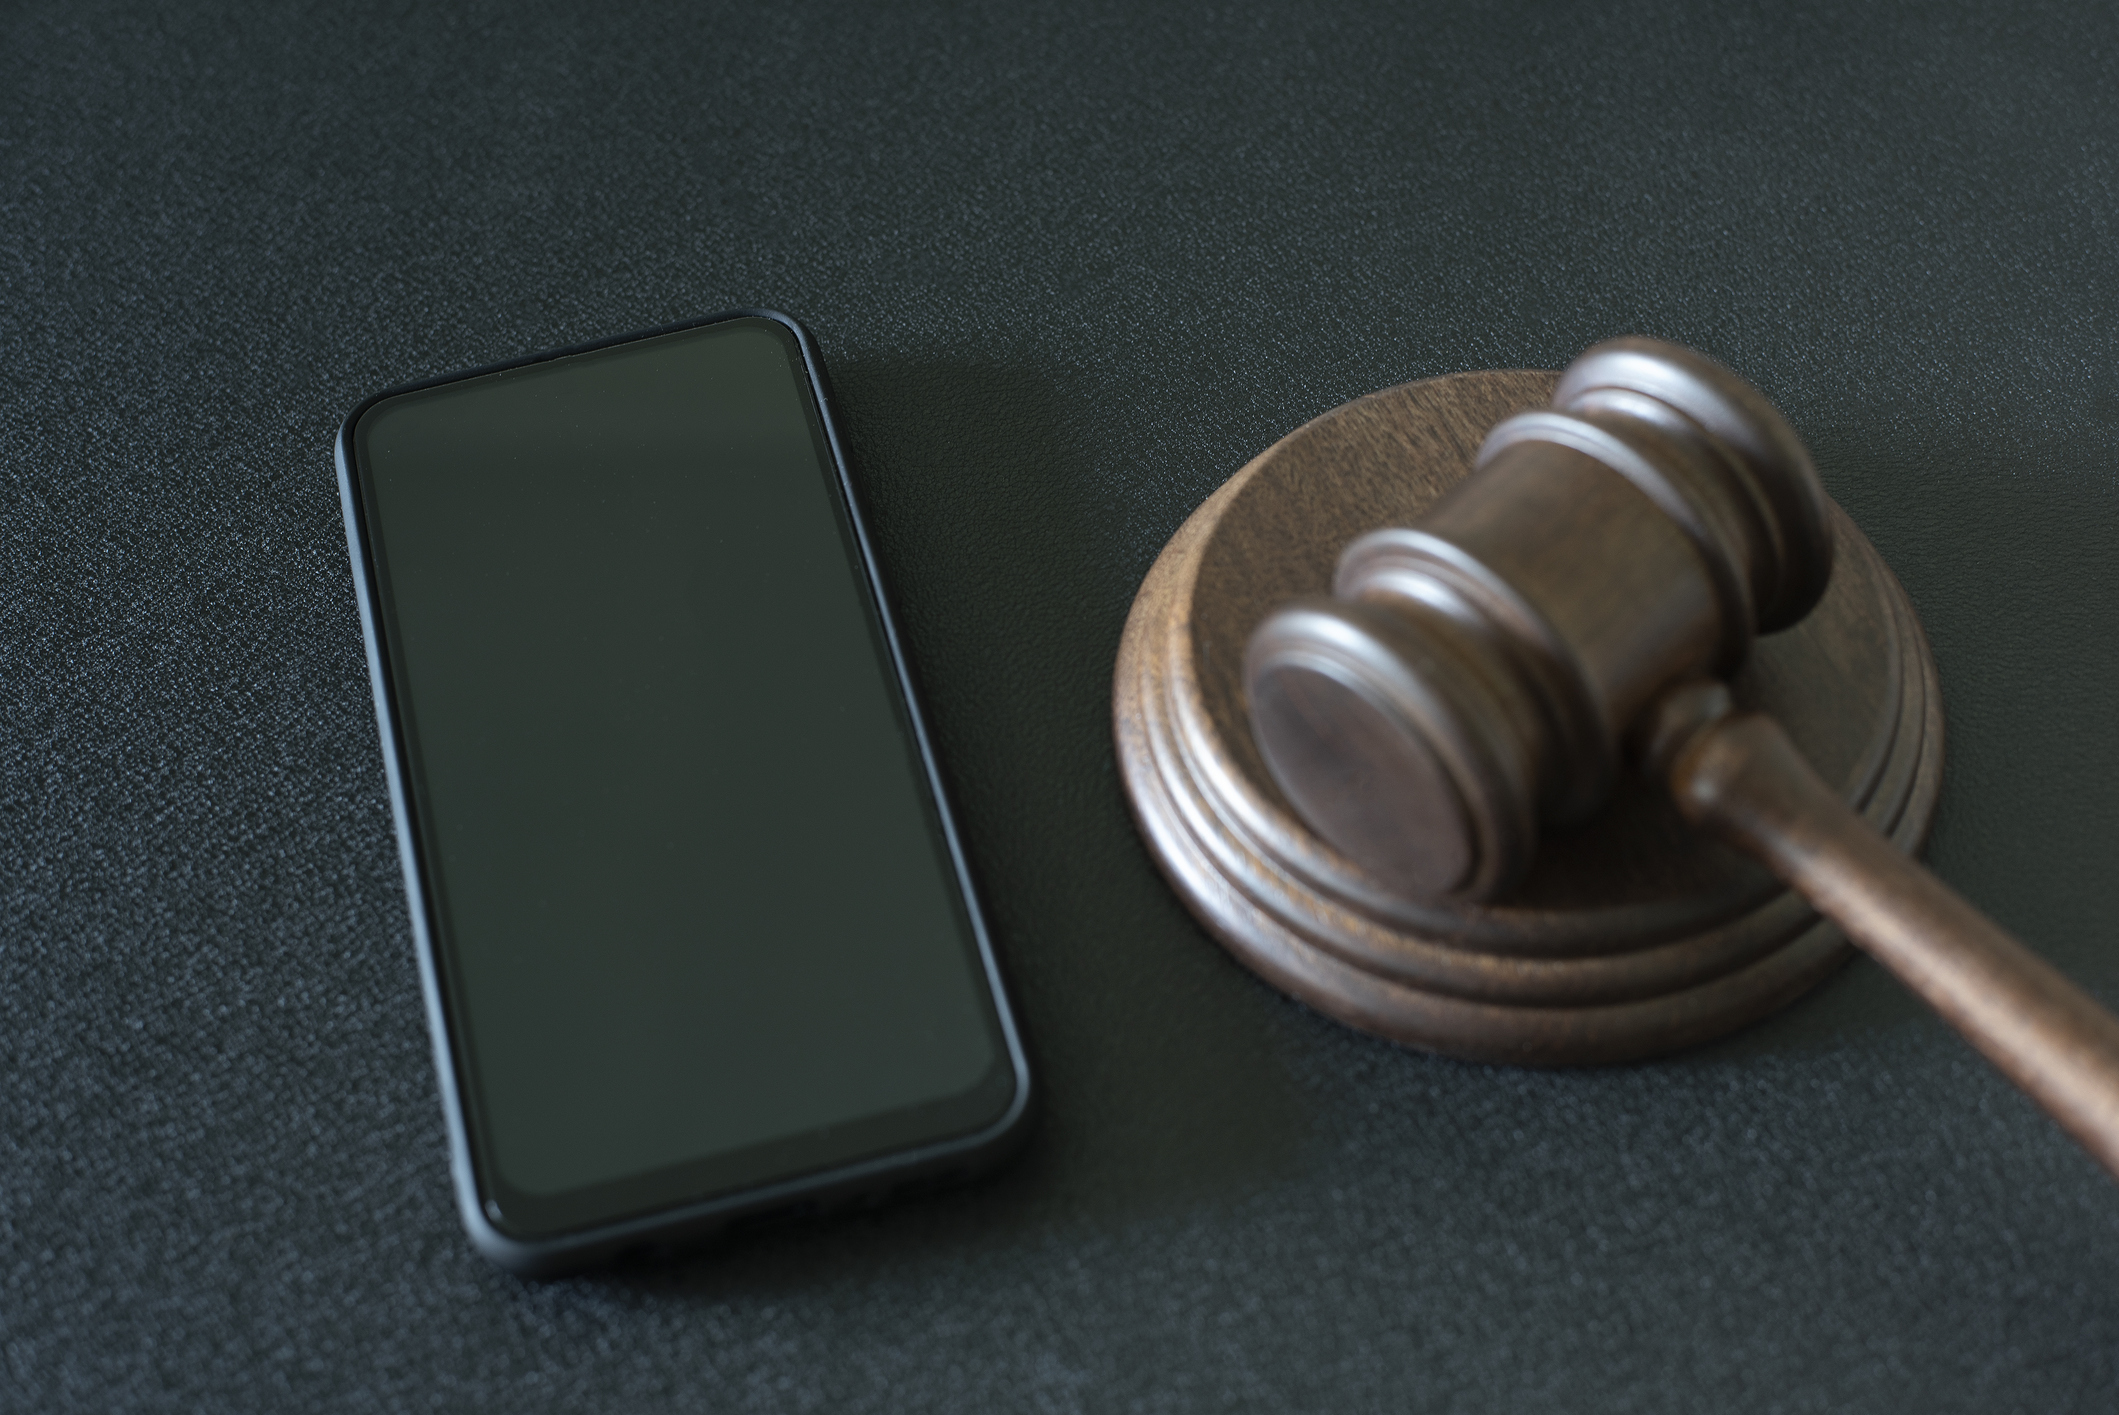 Smartphone and judge gavel on black background